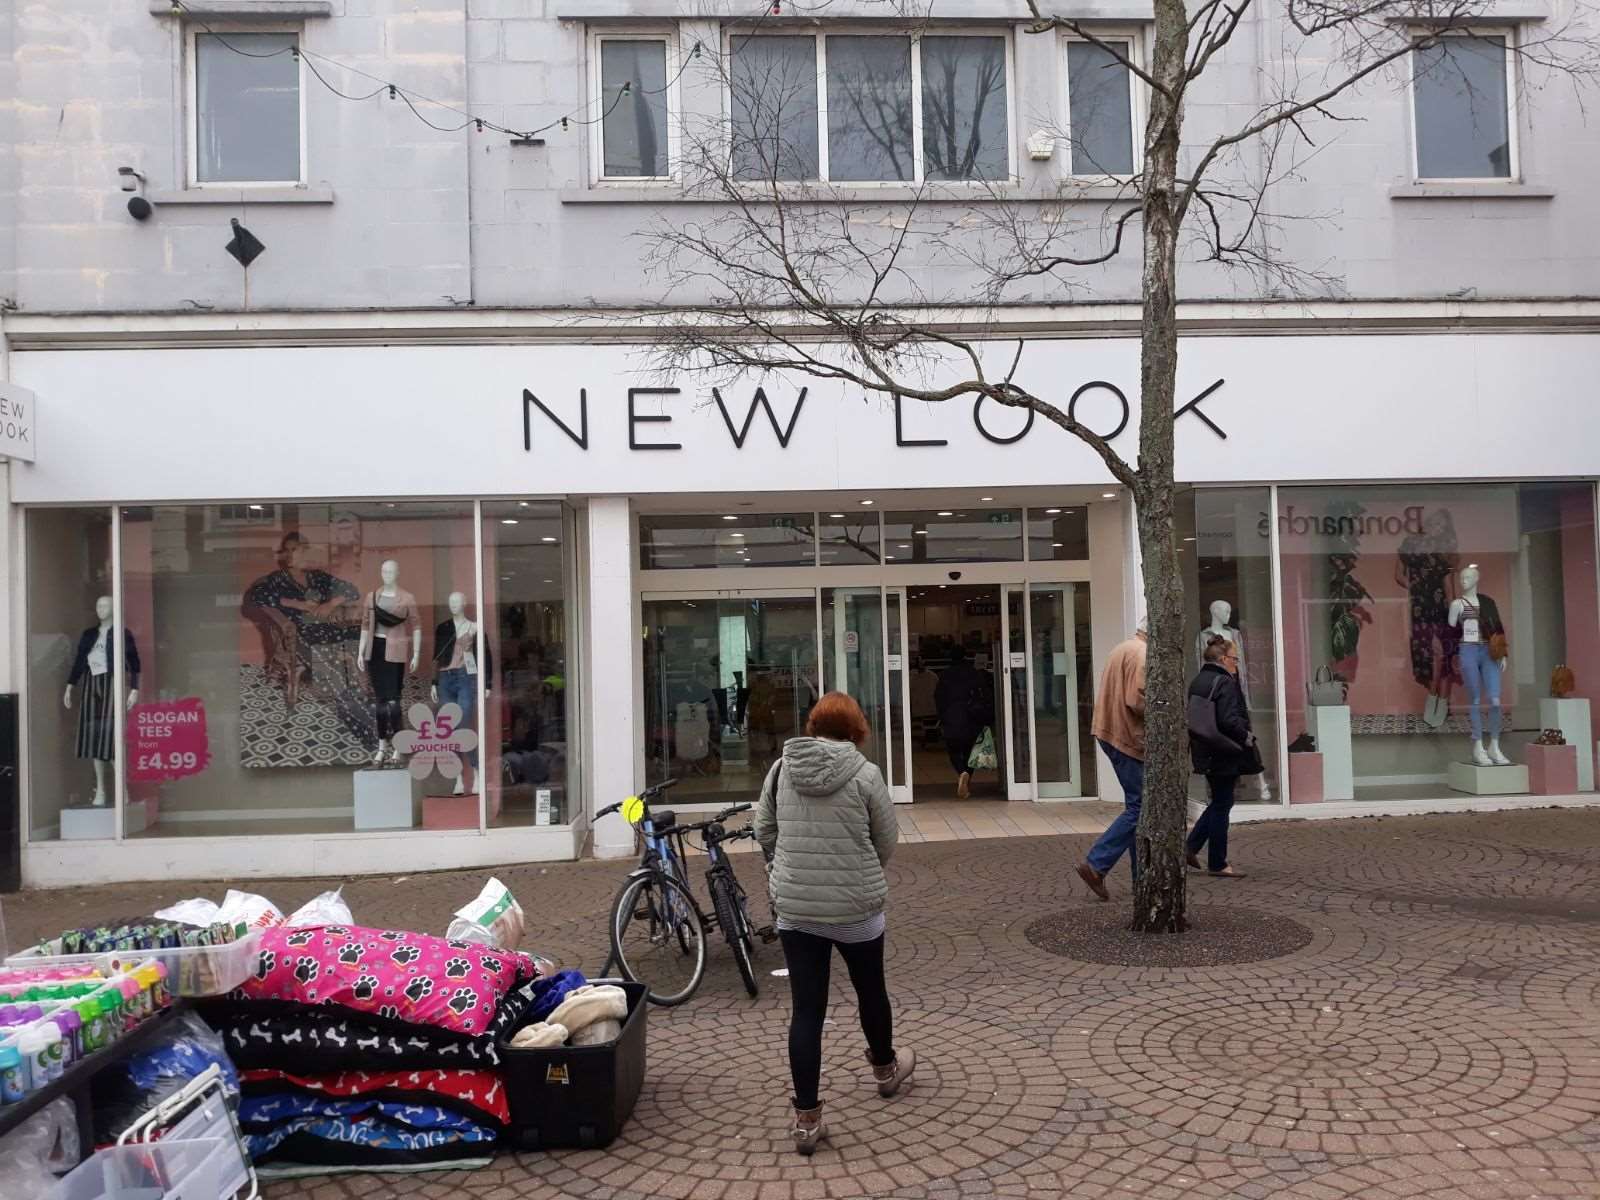 Ramsgate's New Look store